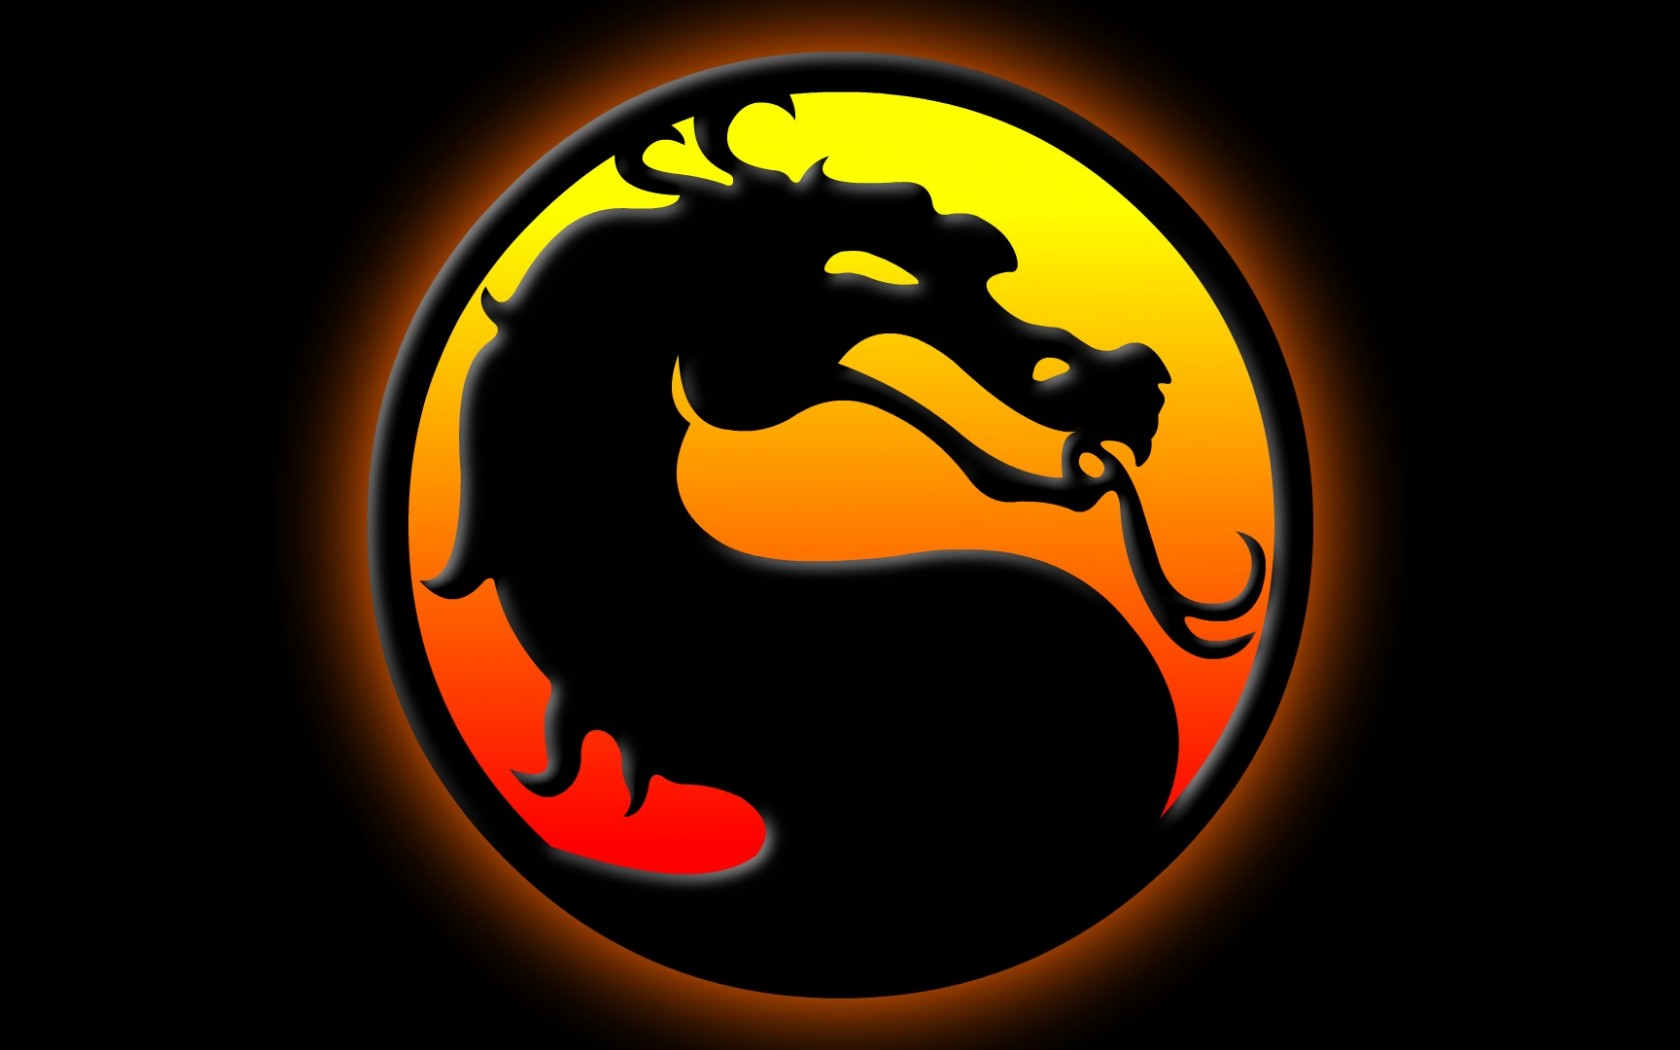 Detonado. Ultimate Mortal Kombat 3 - Todos Os Golpes e Fatalities